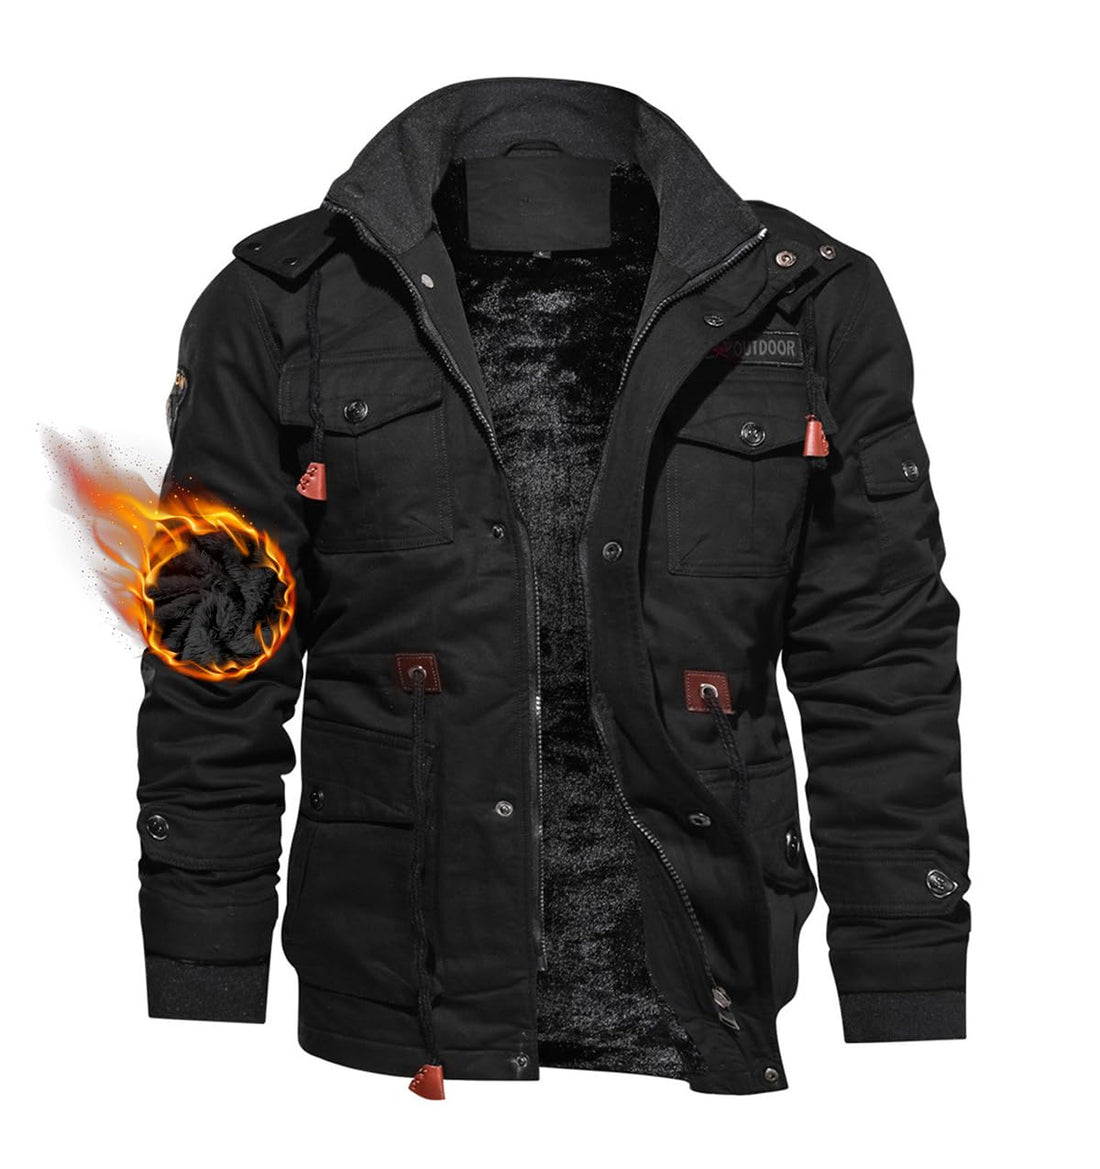 TACVASEN Jackets Men Winter Army Military Jacket Outdoor Cotton Coat Black, US XL/Tag 5XL